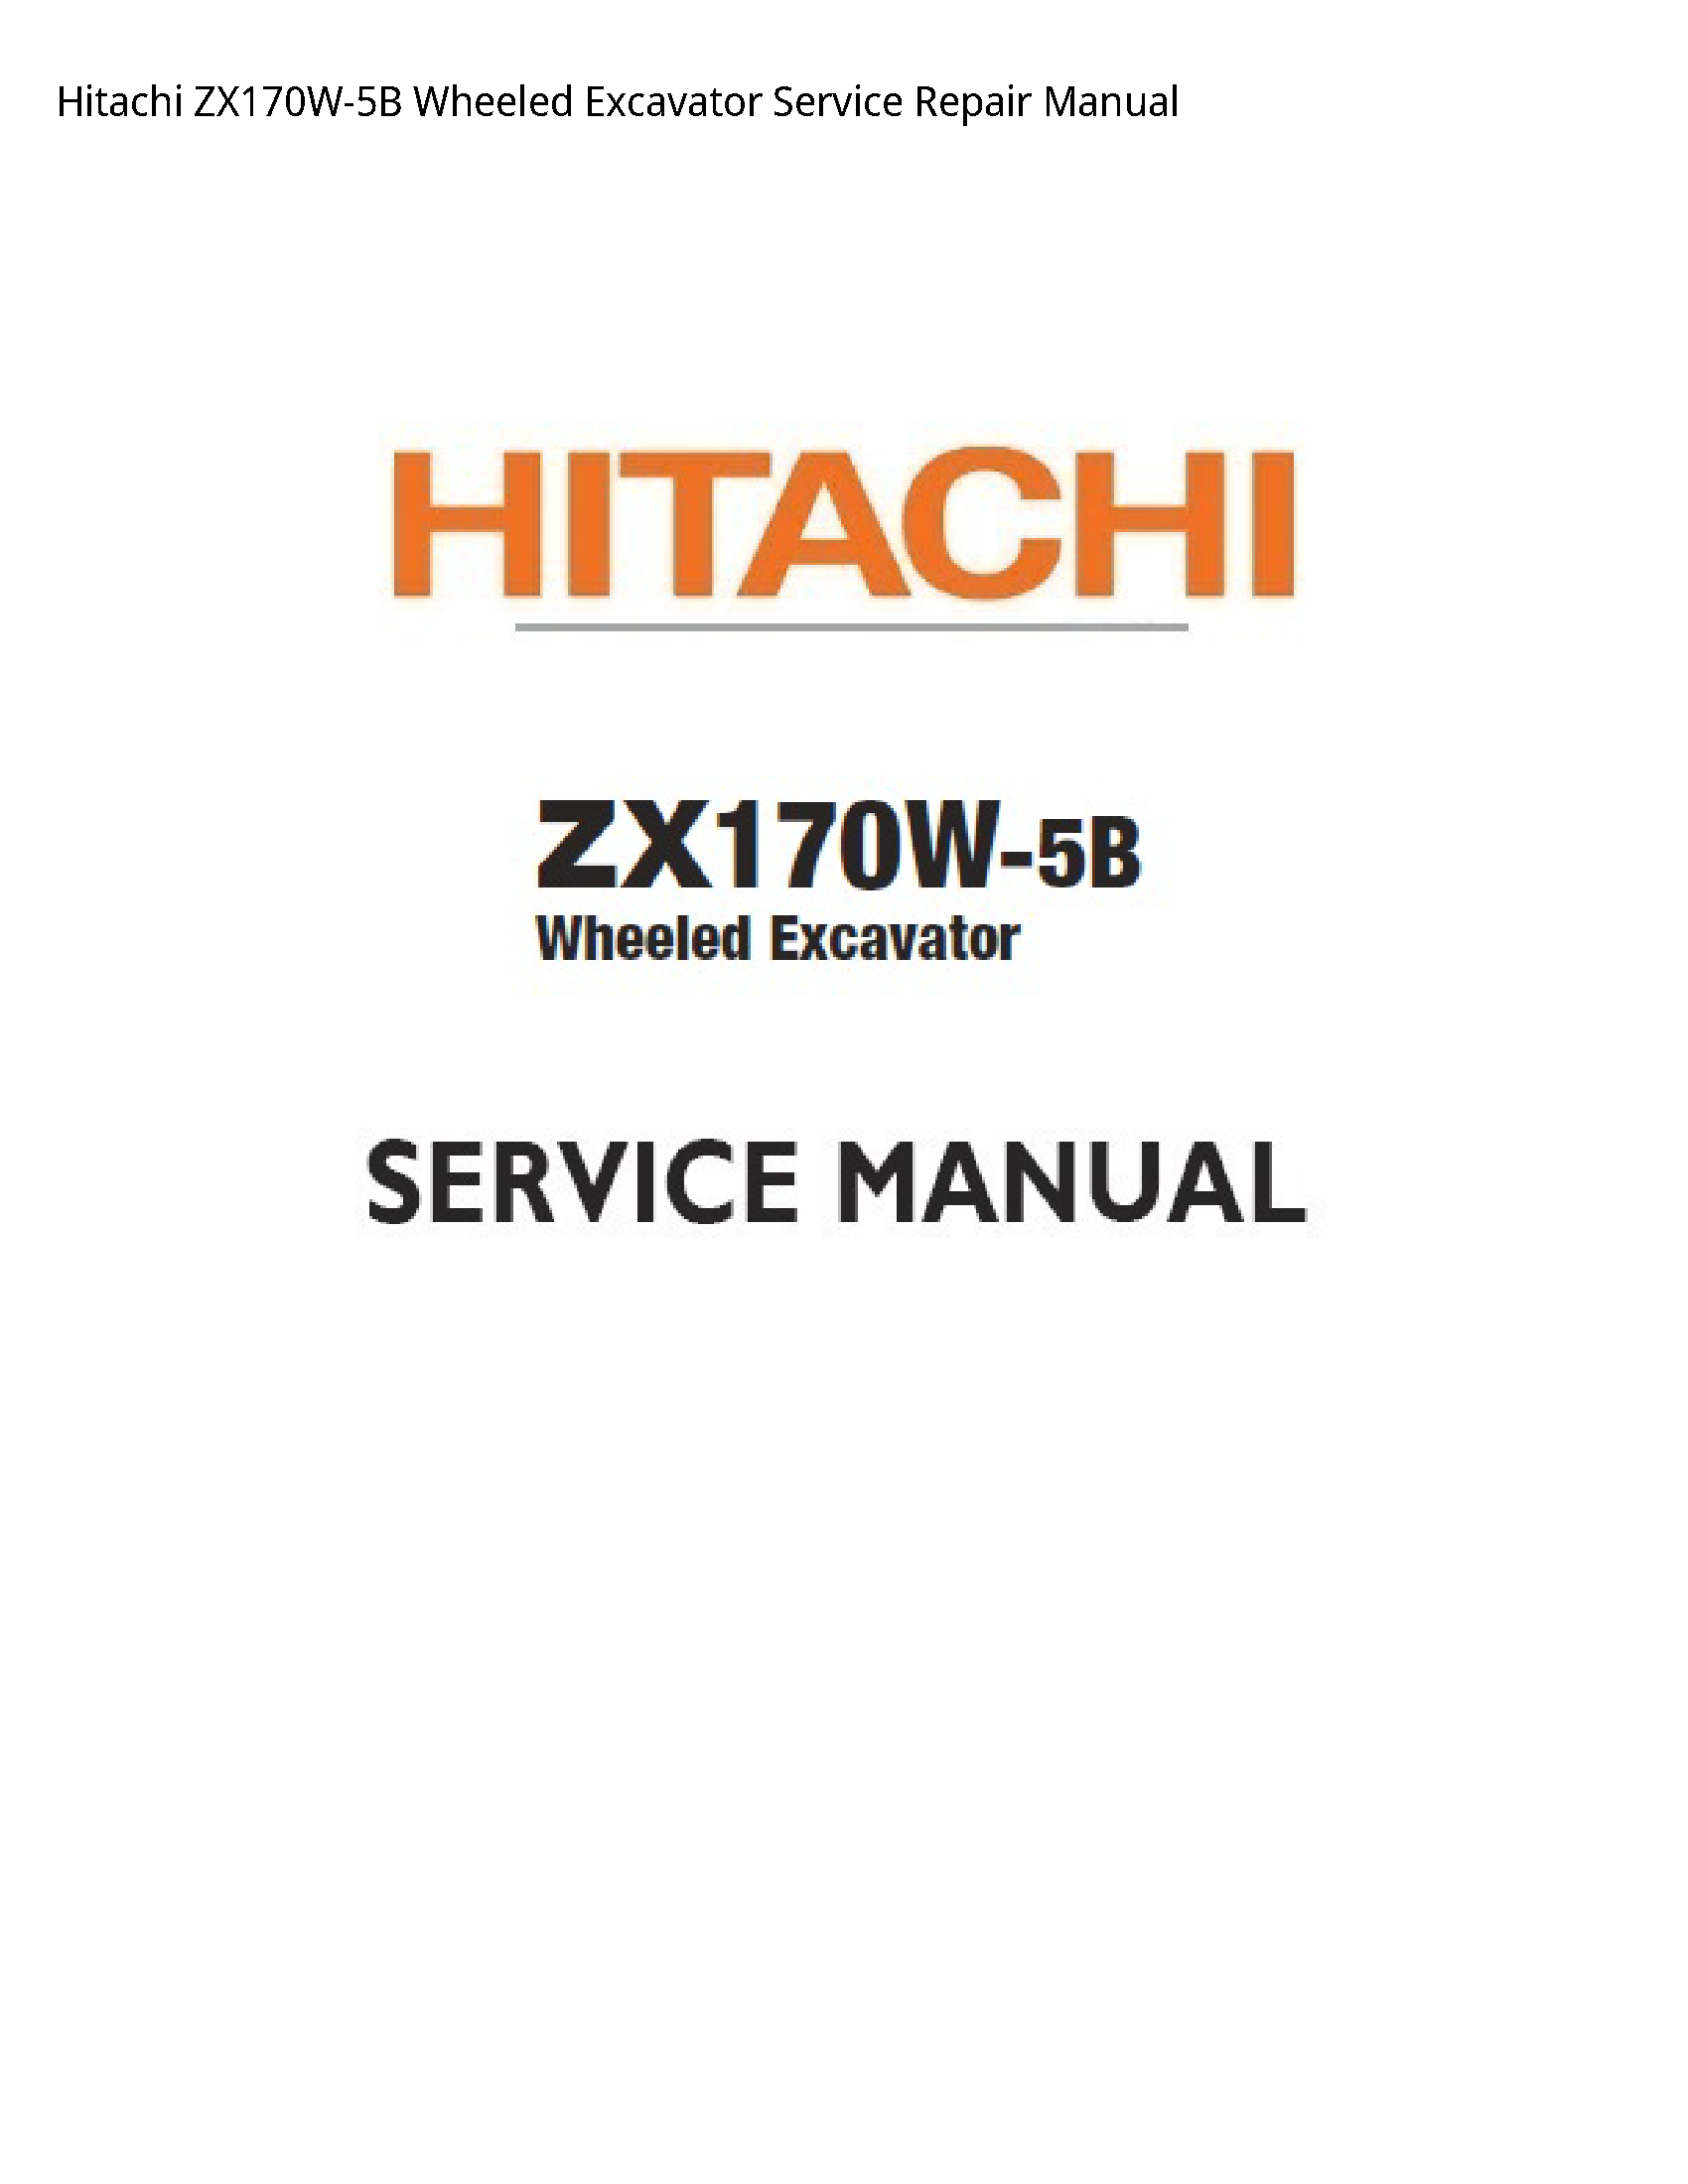 Hitachi ZX170W-5B Wheeled Excavator manual